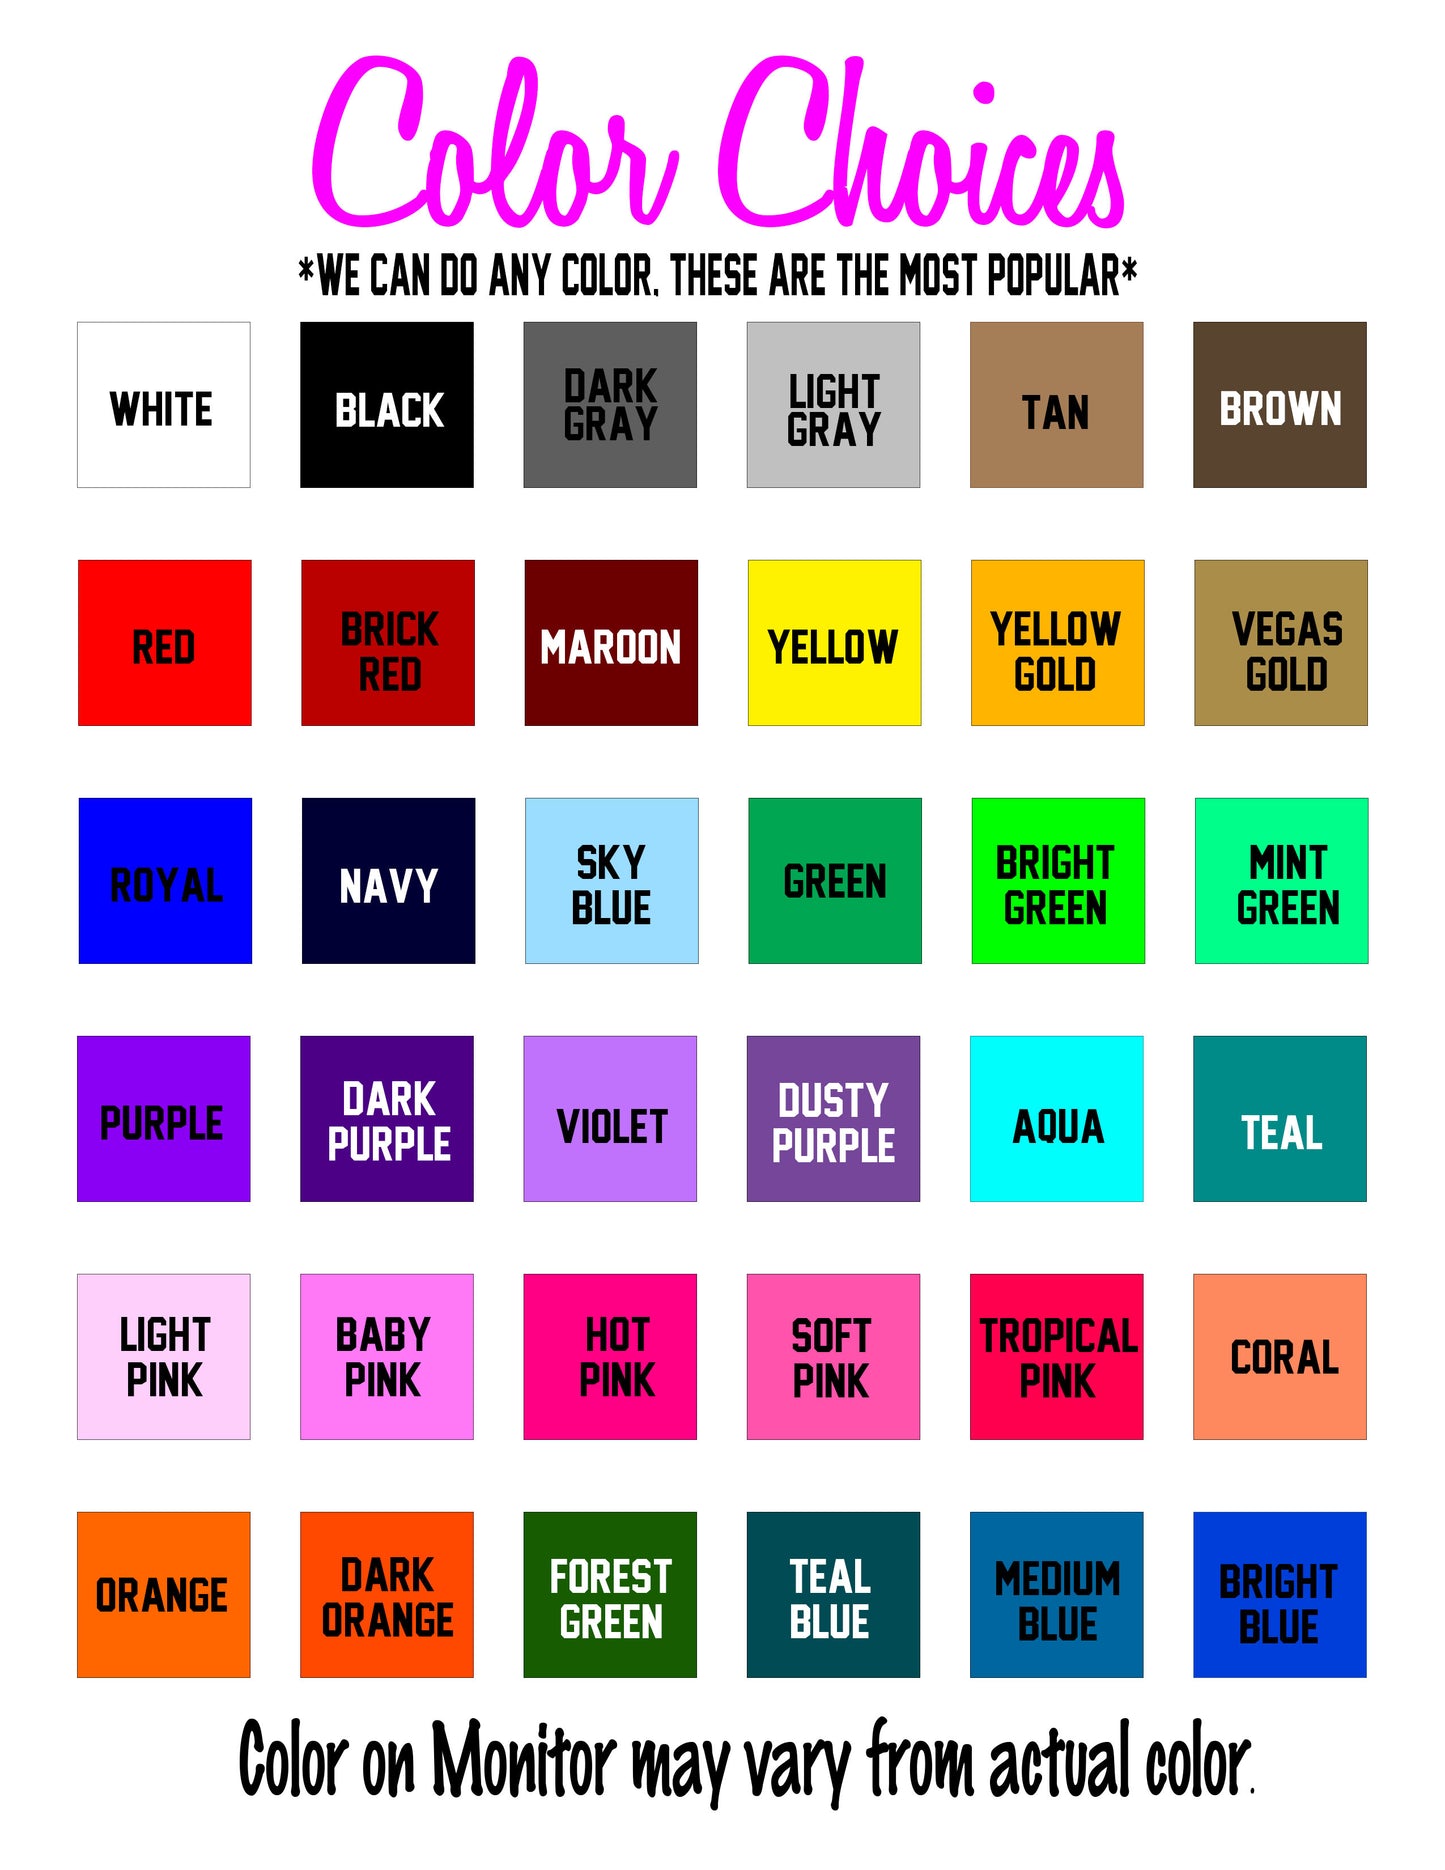 Personalized Rainbow Tie dye Blanket, Plush Blanket